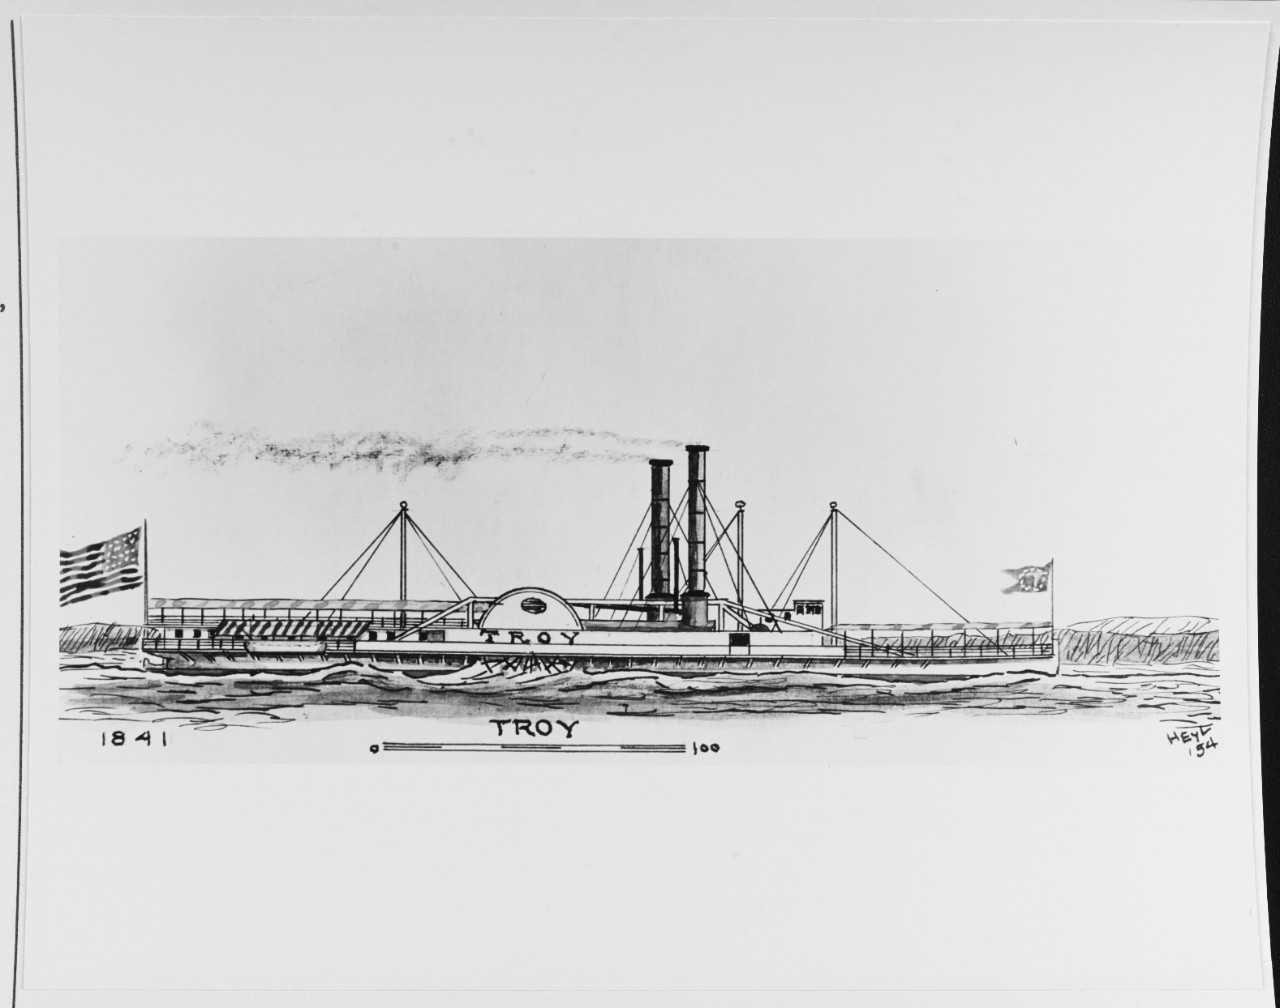 TROY (American Merchant Steamer, 1840-59)